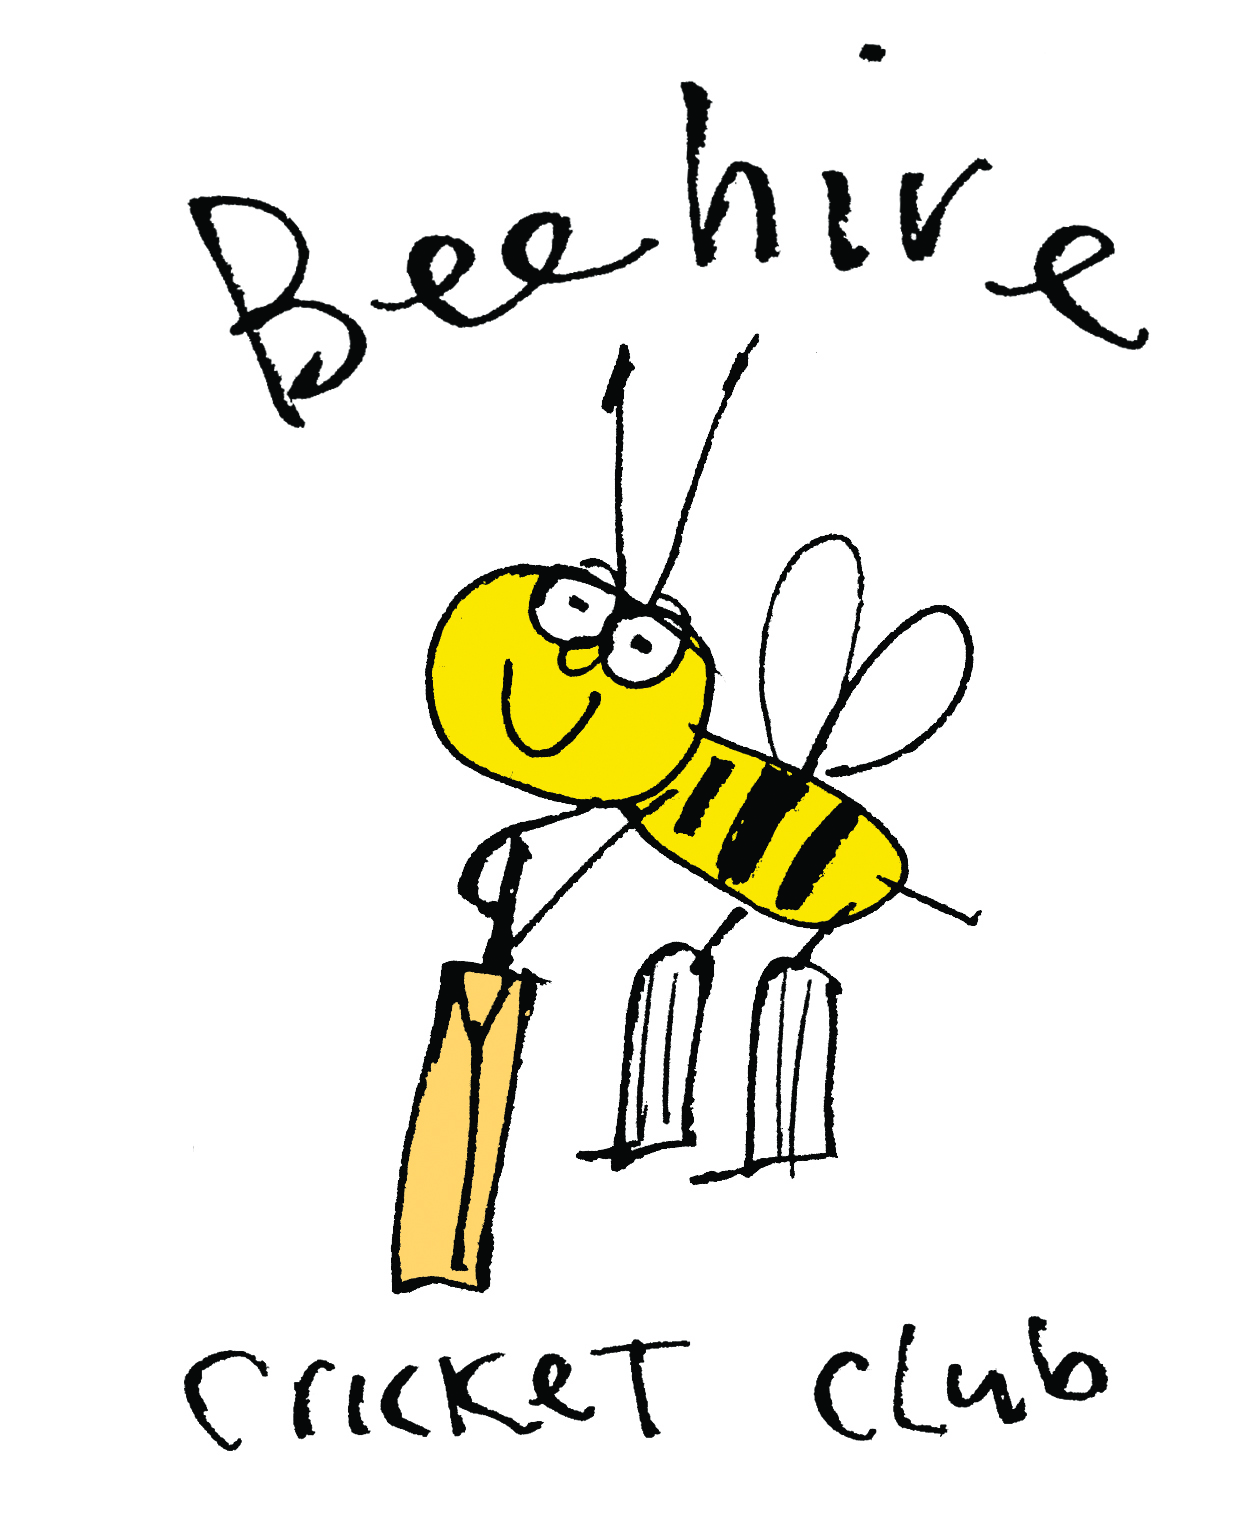 Beehive Cricket Club